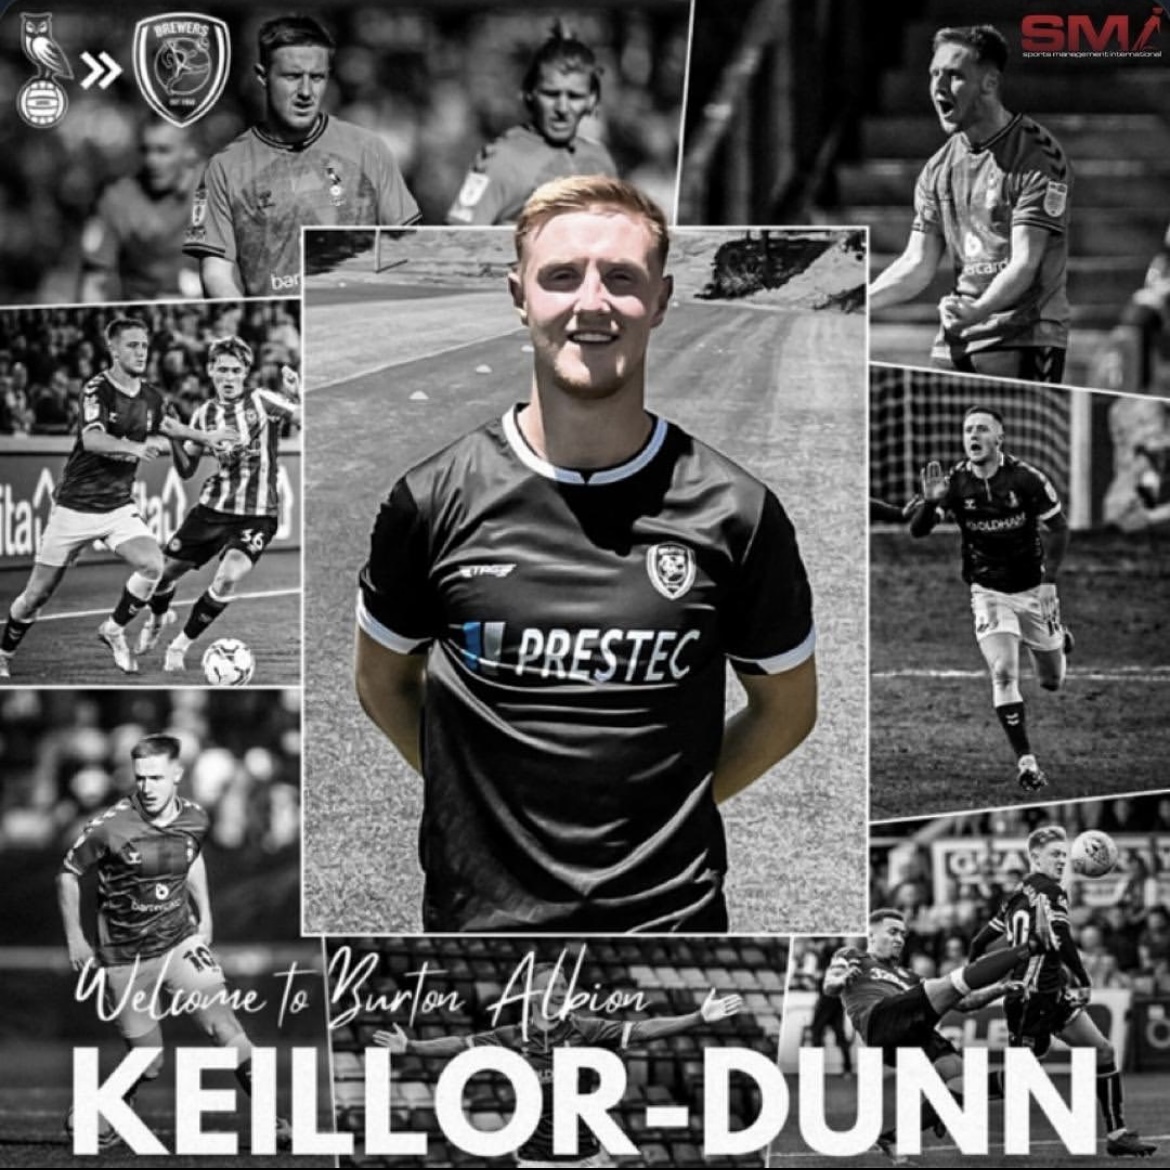 Keillor-Dunn joins Burton